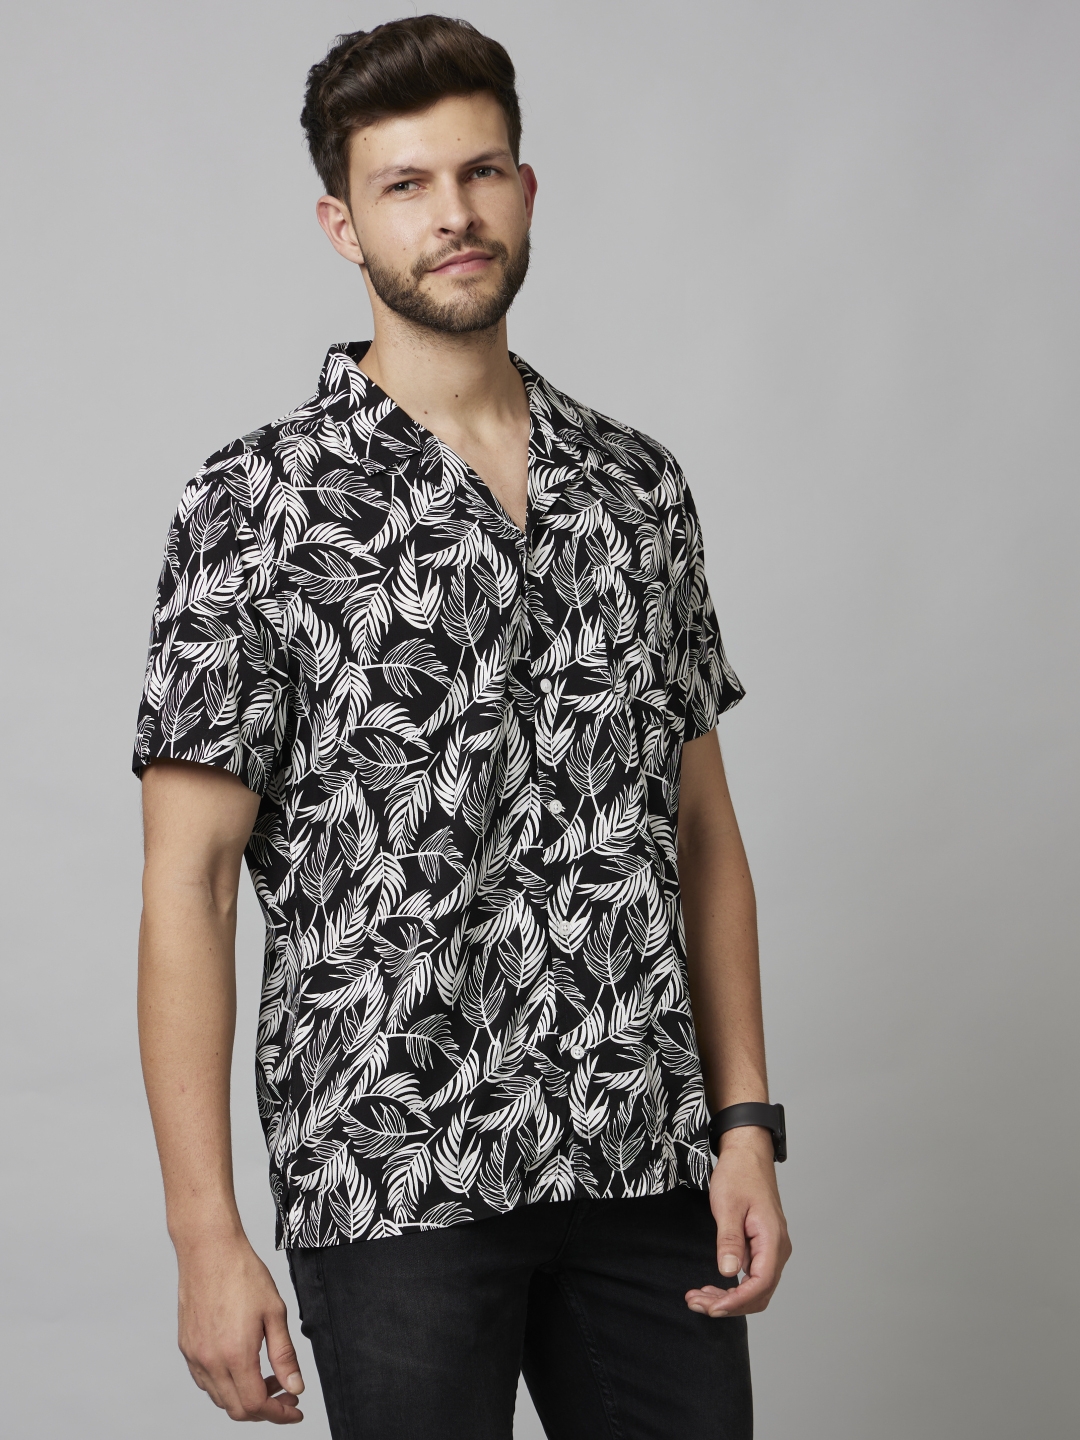 Men's Black Printed Casual Shirts